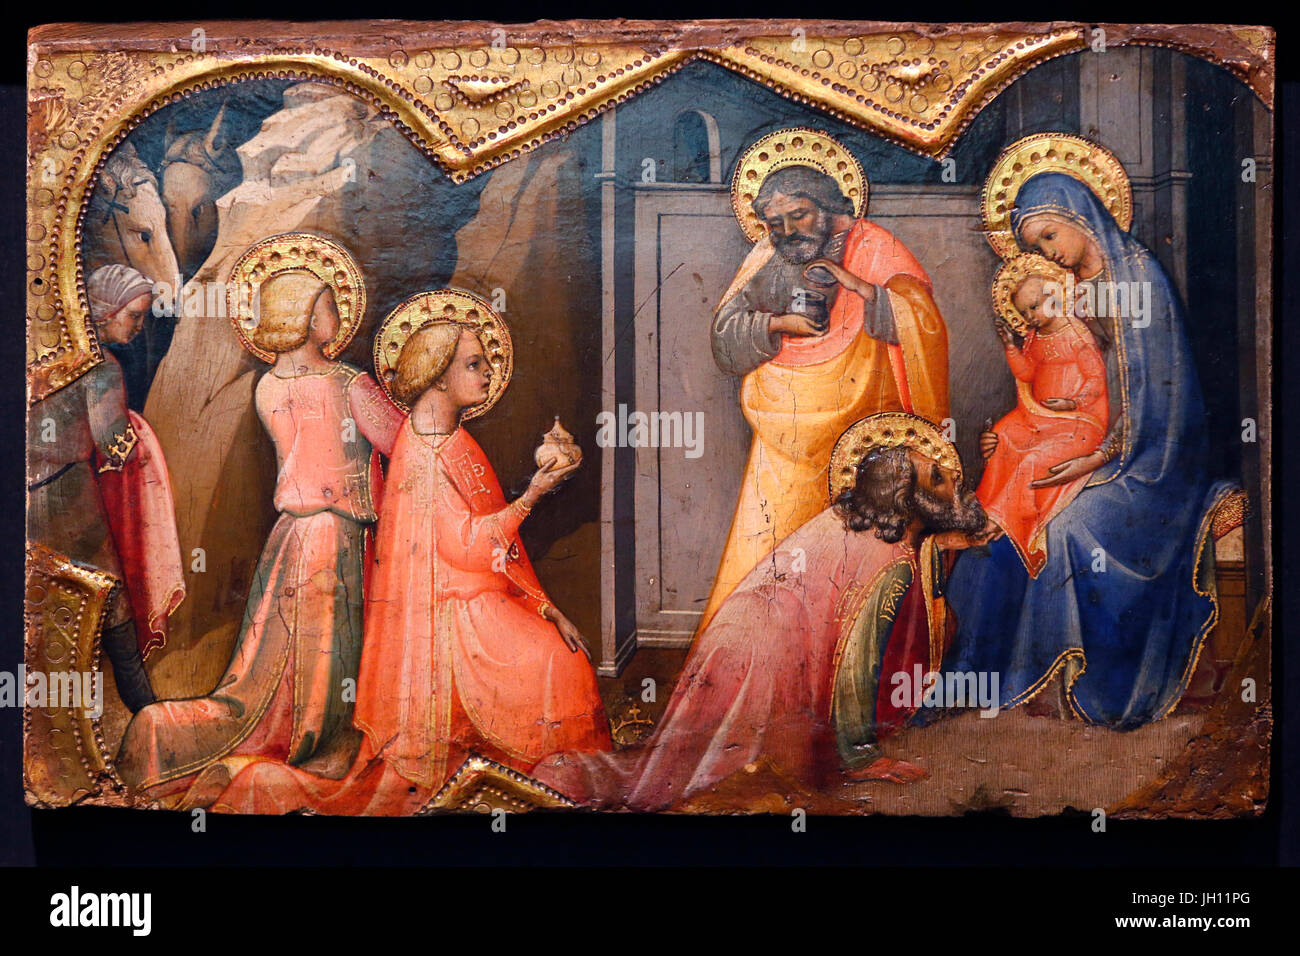 The Courtauld Gallery. Lorenzo Monaco. Predella Panel - The Adoration of the Magi. Around 1409. Tempera on panel. United kingdom. Stock Photo